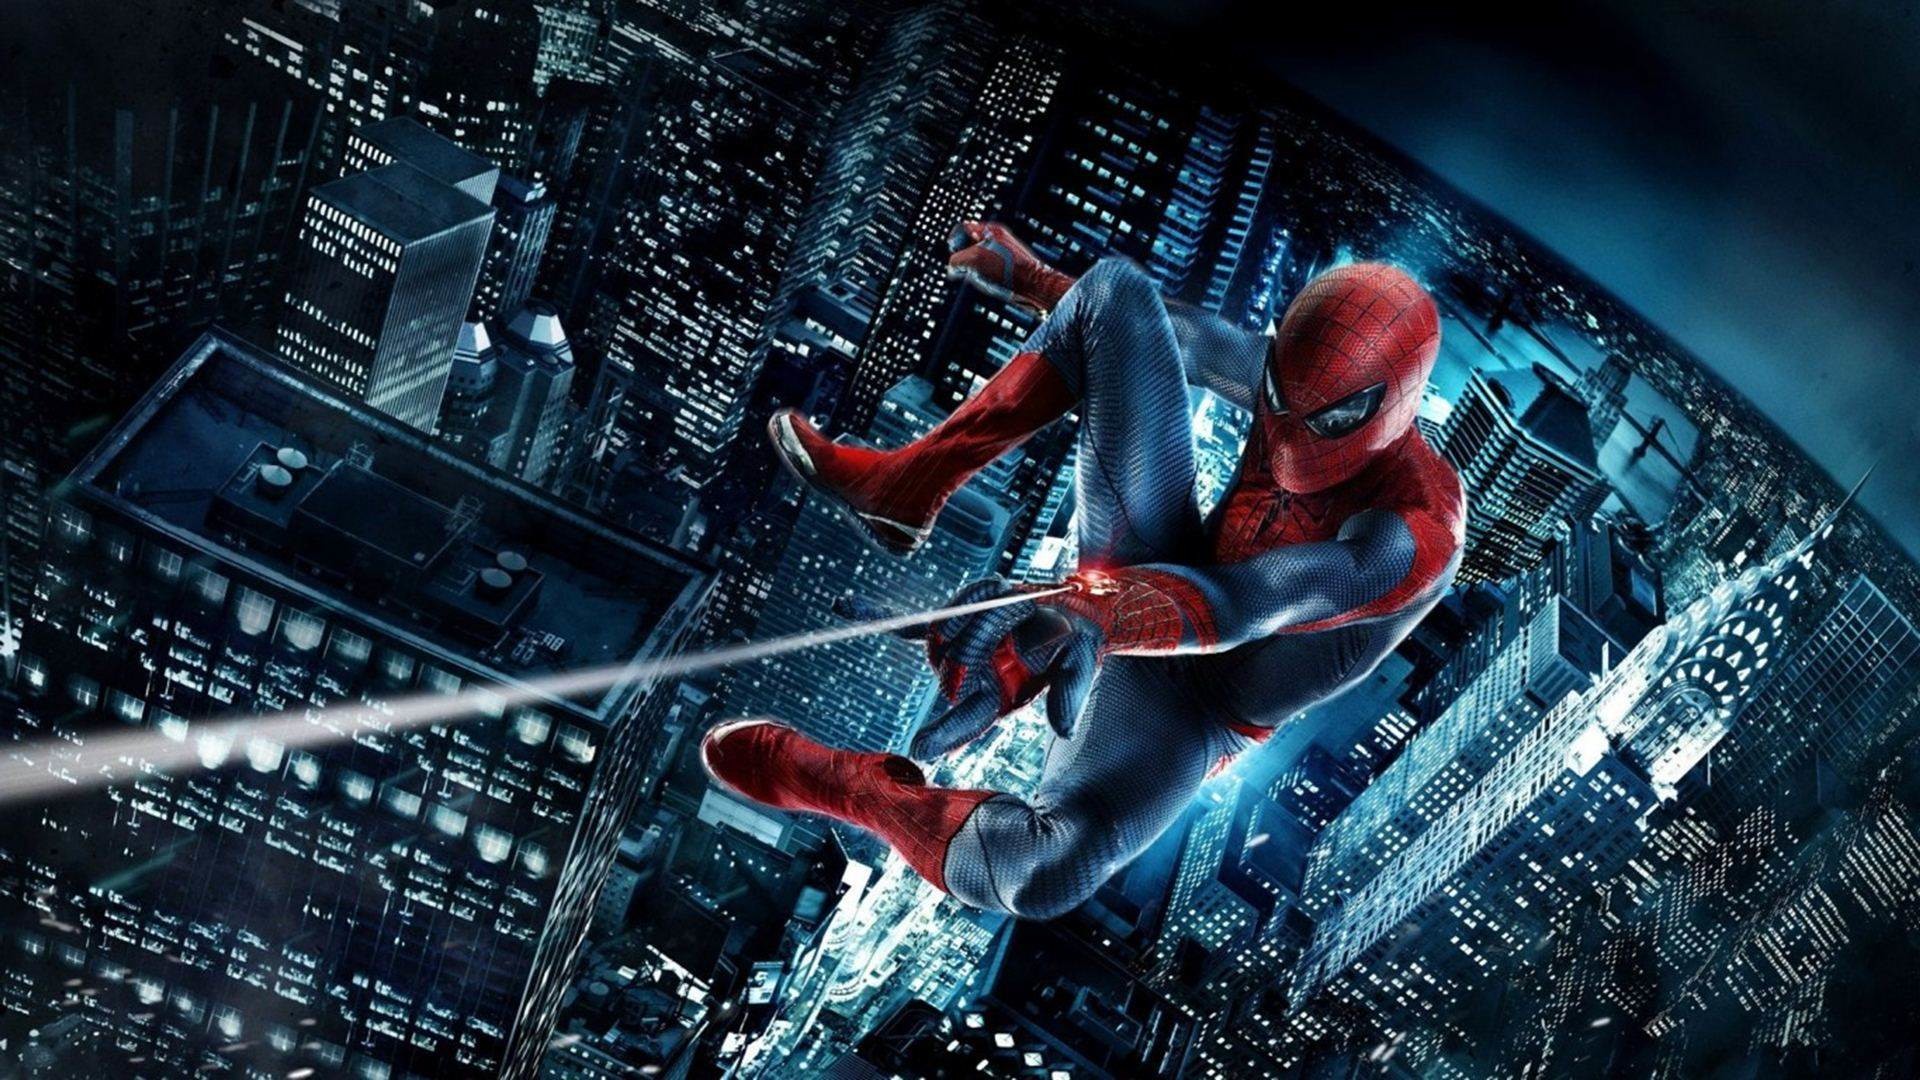 The Amazing SpiderMan HD desktop wallpaper : High 1024Ã768 The Amazing  Spiderman 2 Wallpapers